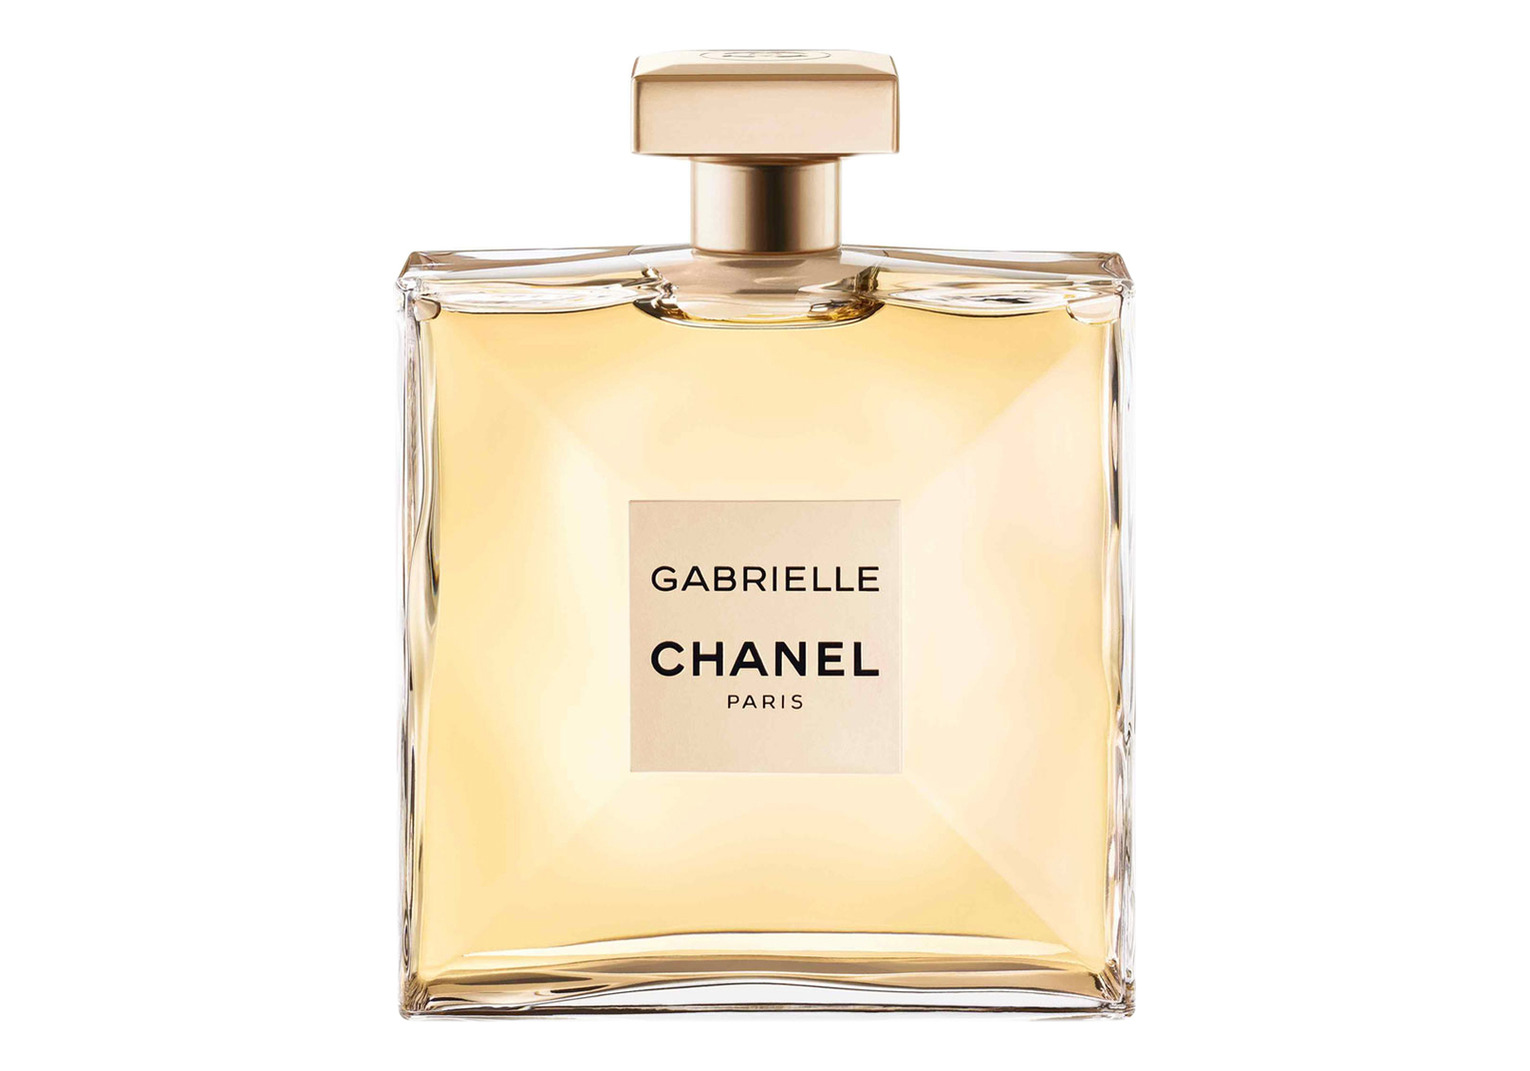 Шанель габриэль эссенс. Chanel Gabrielle Essence 50 ml. Chanel Gabrielle 100ml. Духи Шанель 100 мл. Духи Шанель Габриэль Эссенс.